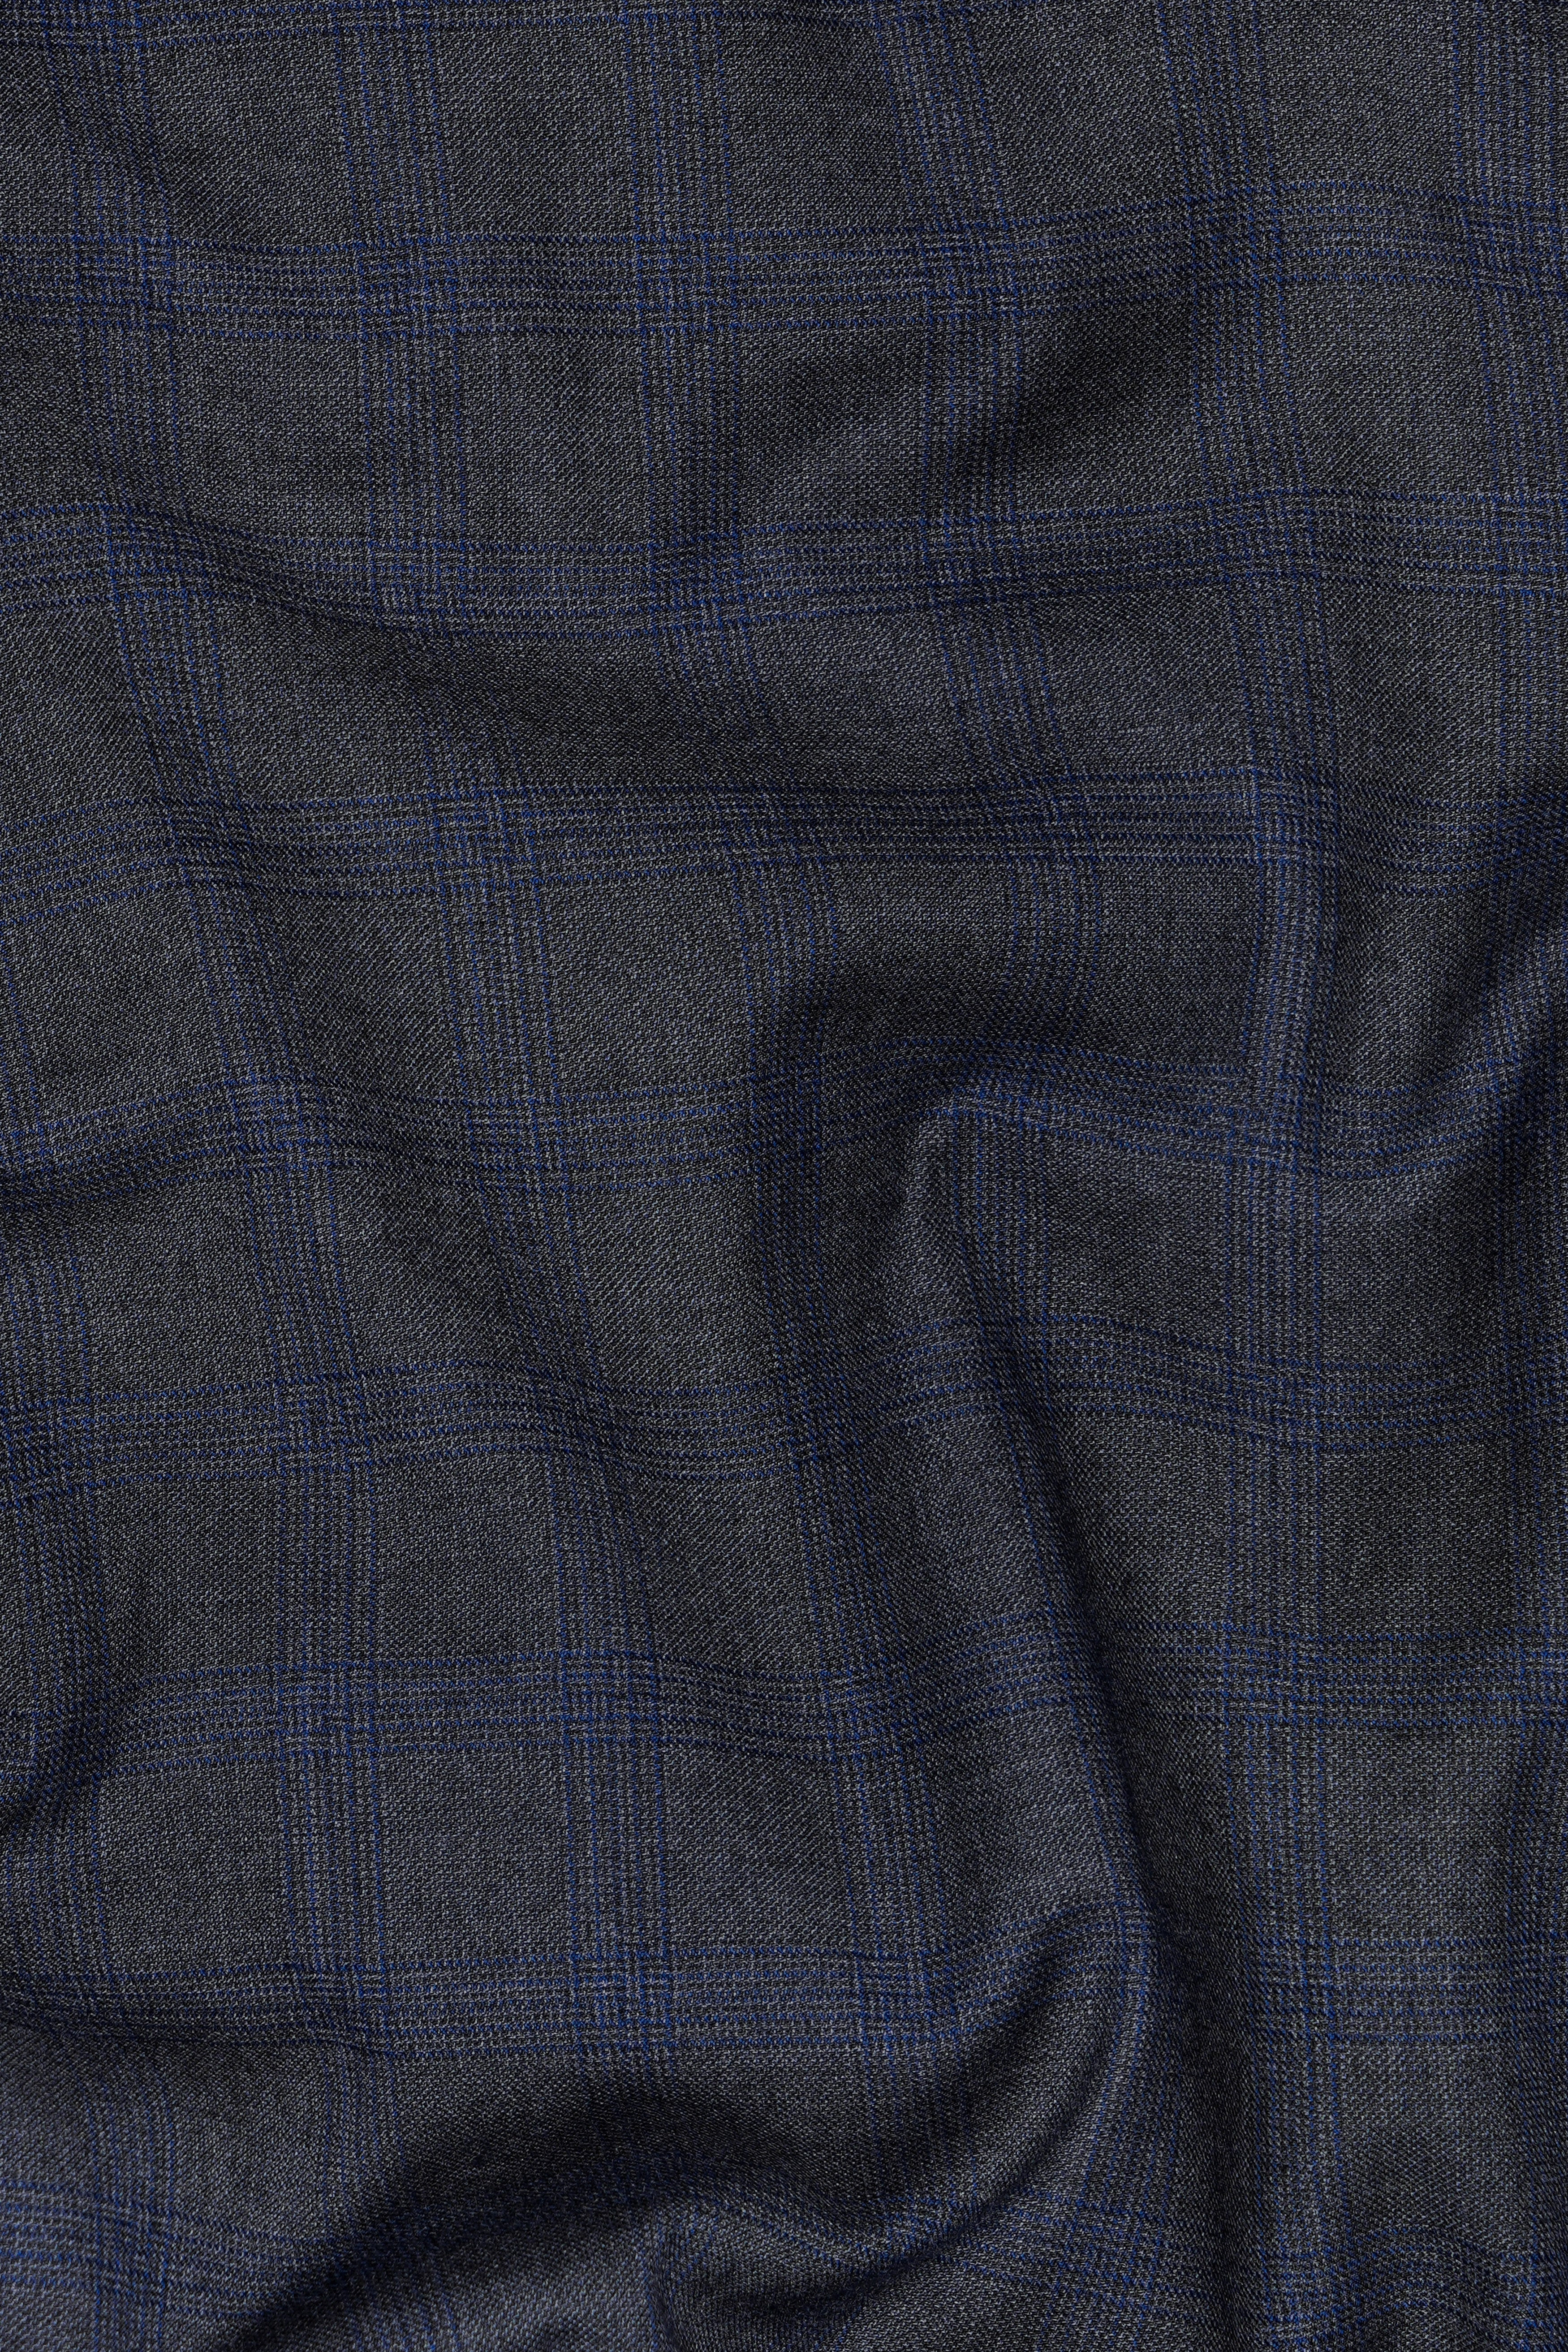 Capecod Gray and Delft Blue Subtle Checkered Wool Rich Pant T2905-SW-28, T2905-SW-30, T2905-SW-32, T2905-SW-34, T2905-SW-36, T2905-SW-38, T2905-SW-40, T2905-SW-42, T2905-SW-44